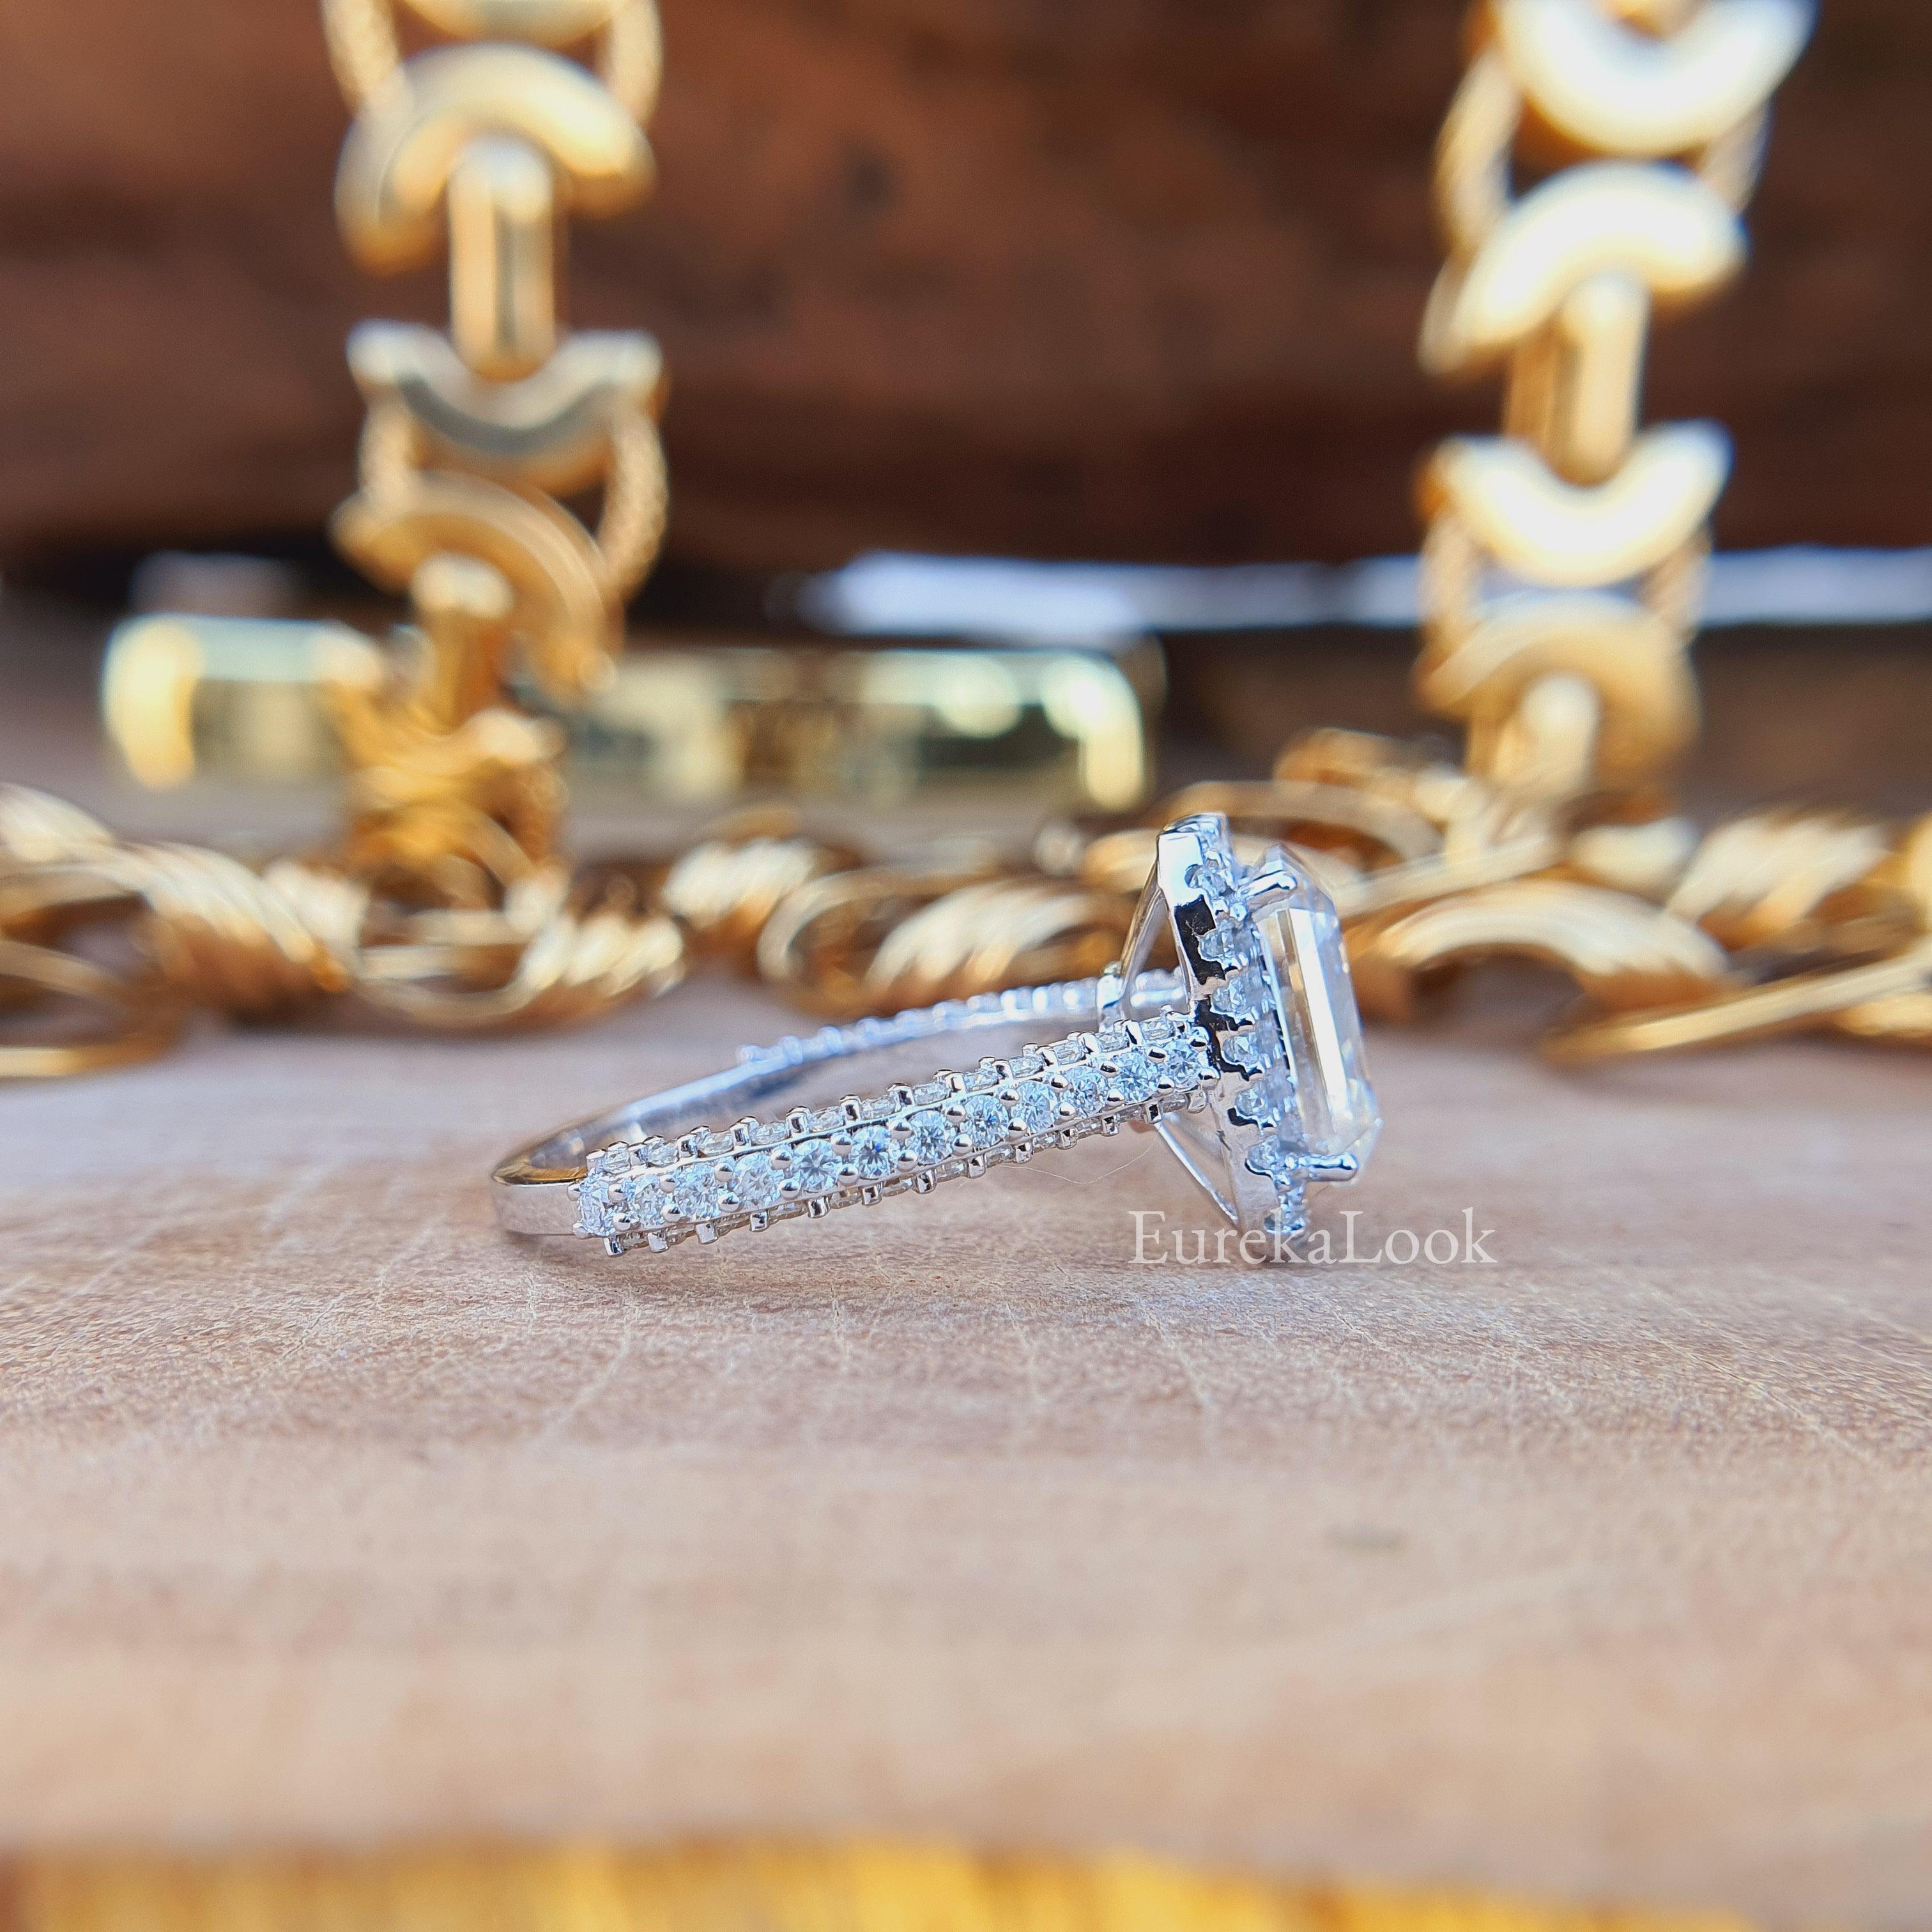 2.60CT Emerald Cut Moissanite Halo Engagement Ring - Eurekalook